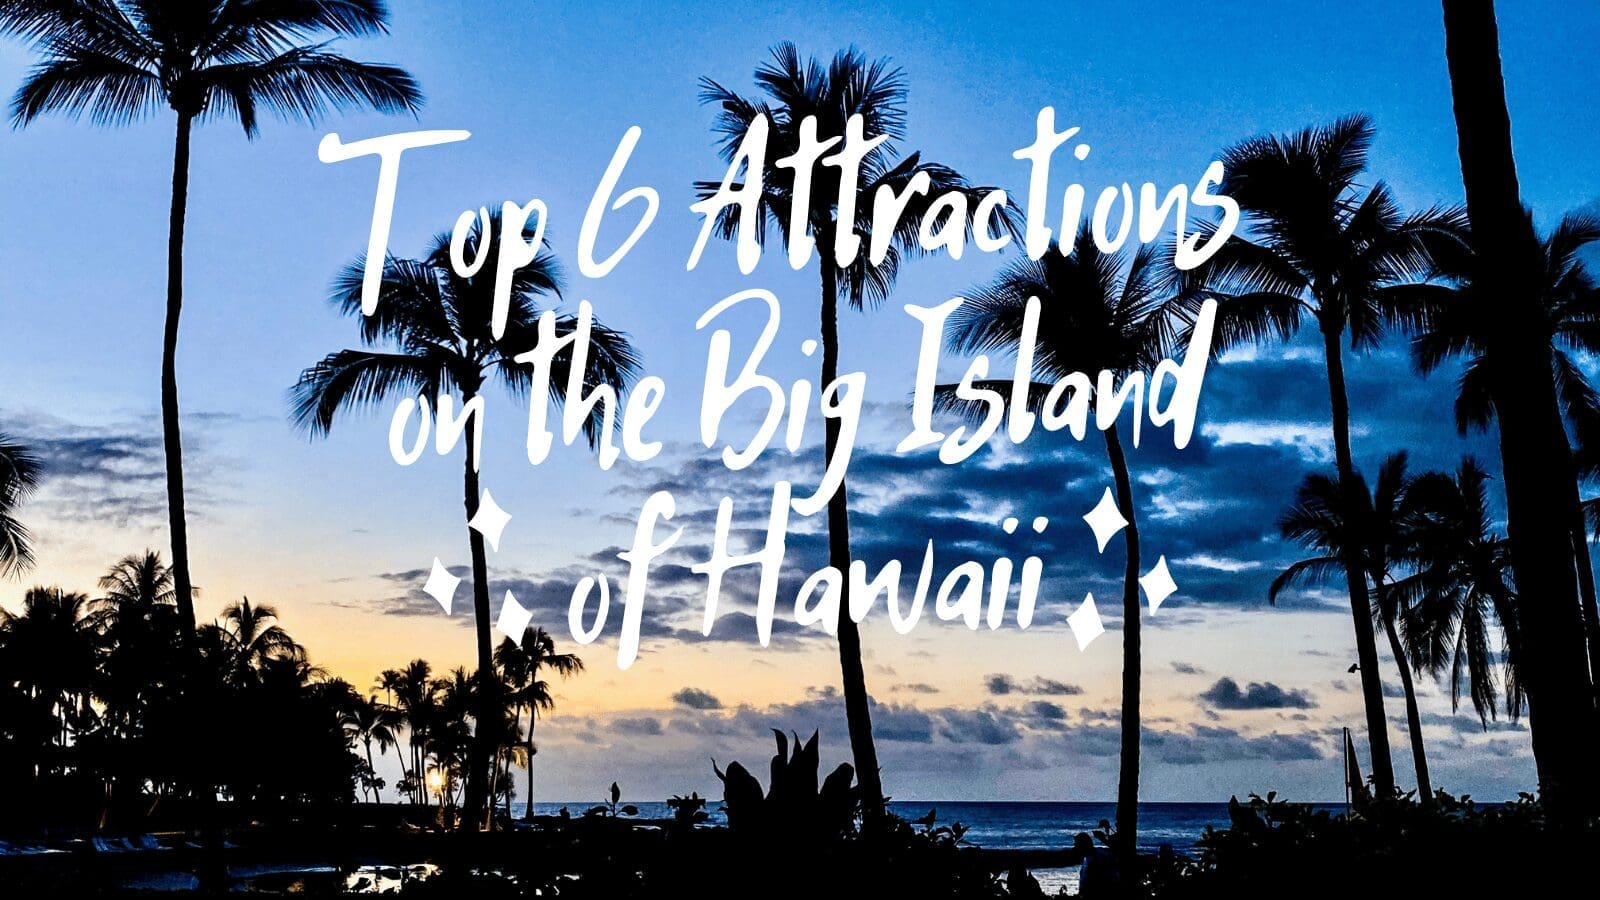 Things to do on the big island of hawaii